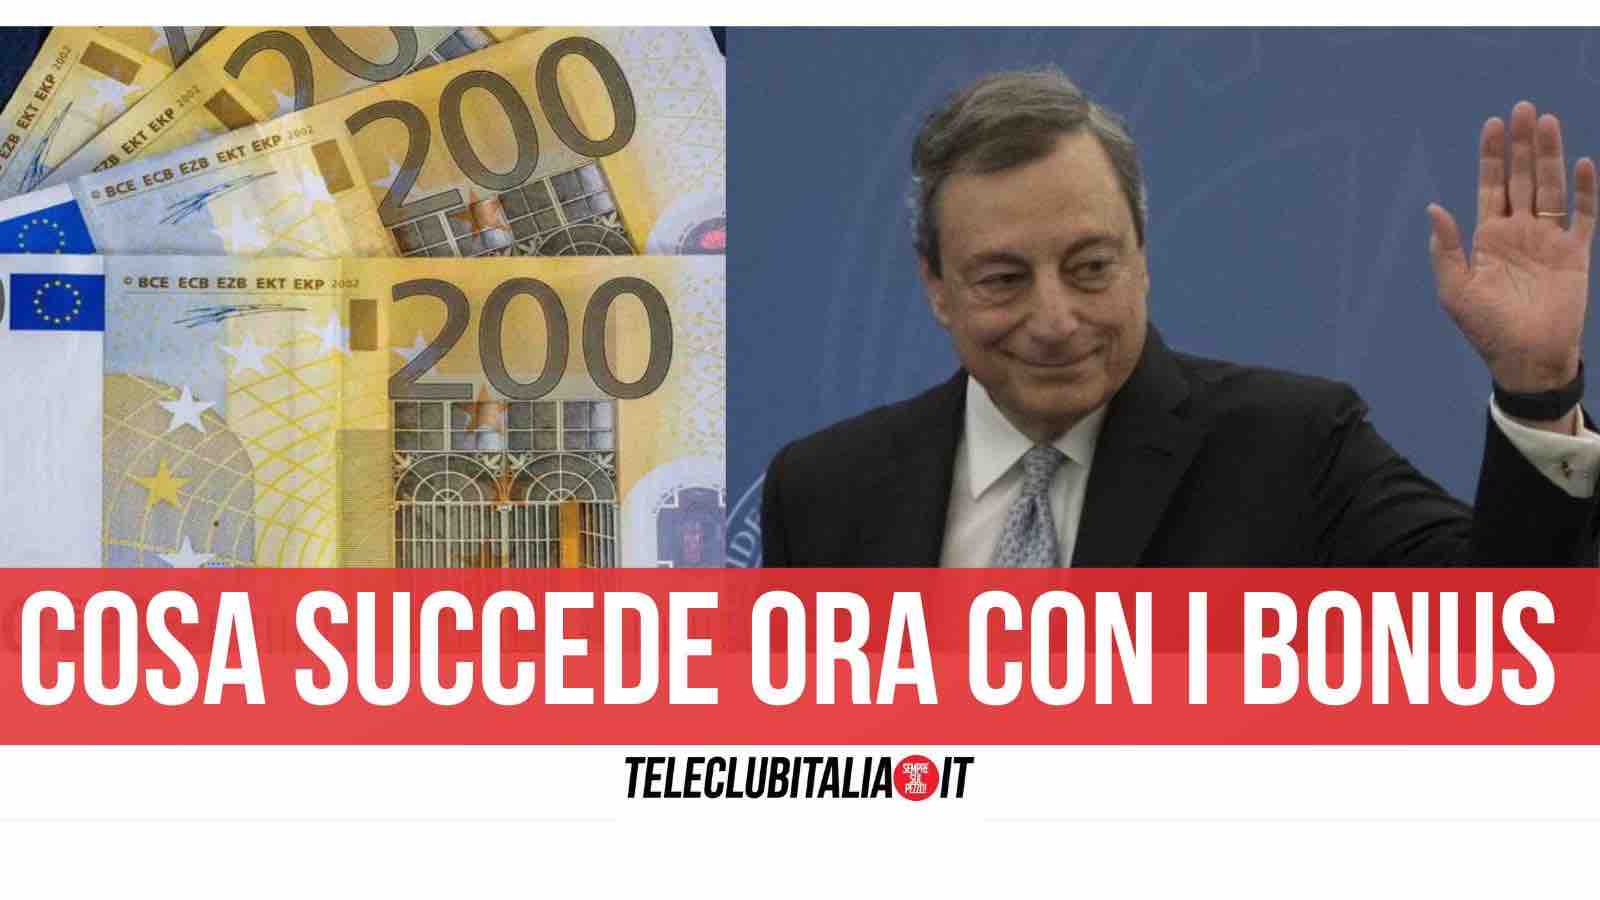 bonus 200 euro crisi governo